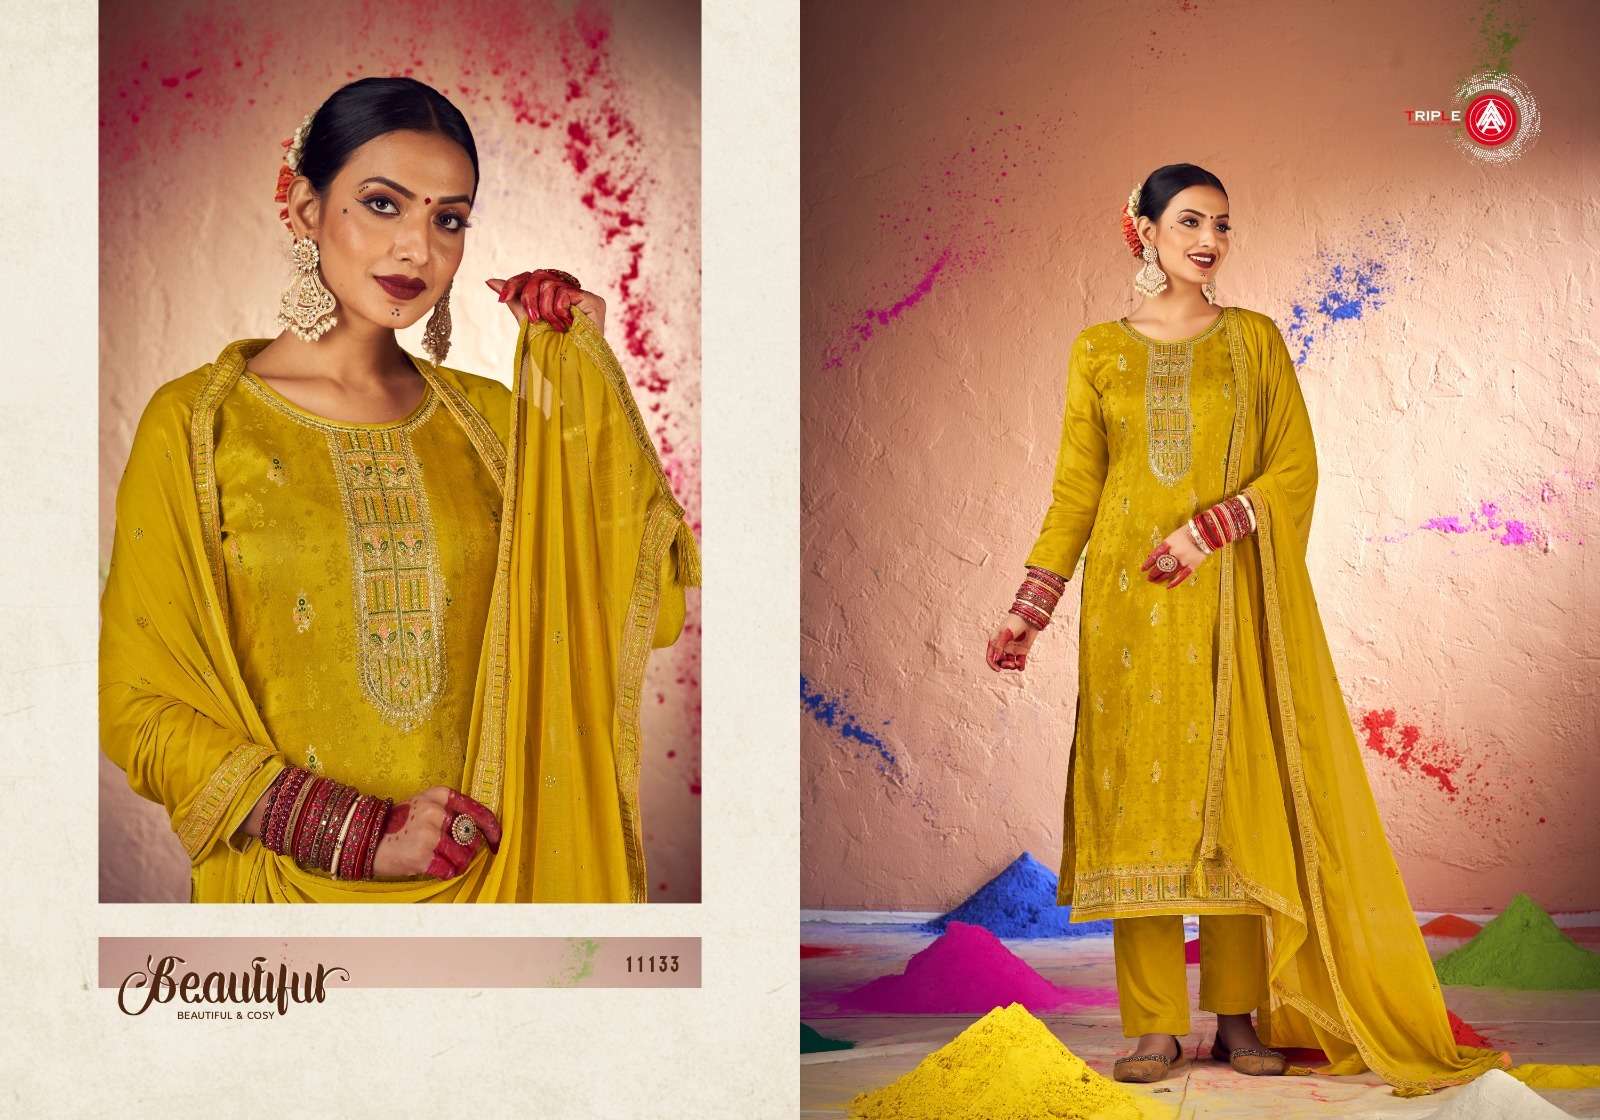 lali triple AAA 11131-11134 series designer latest partywear salwar kameez wholesaler surat